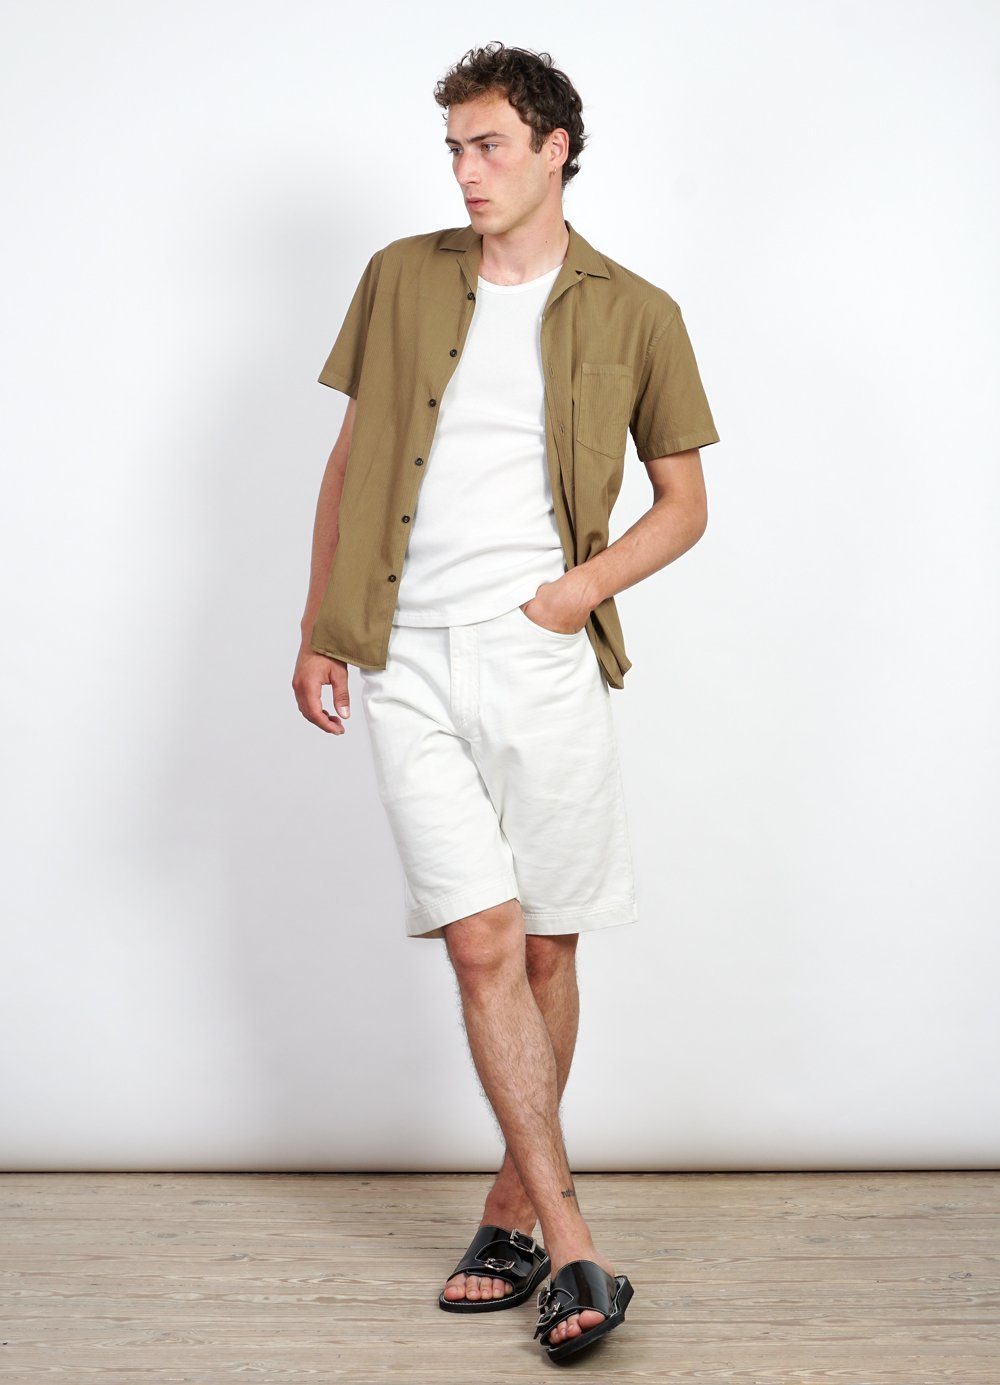 JONNY | Short Sleeve Shirt | Kalahari -HANSEN Garments- HANSEN Garments